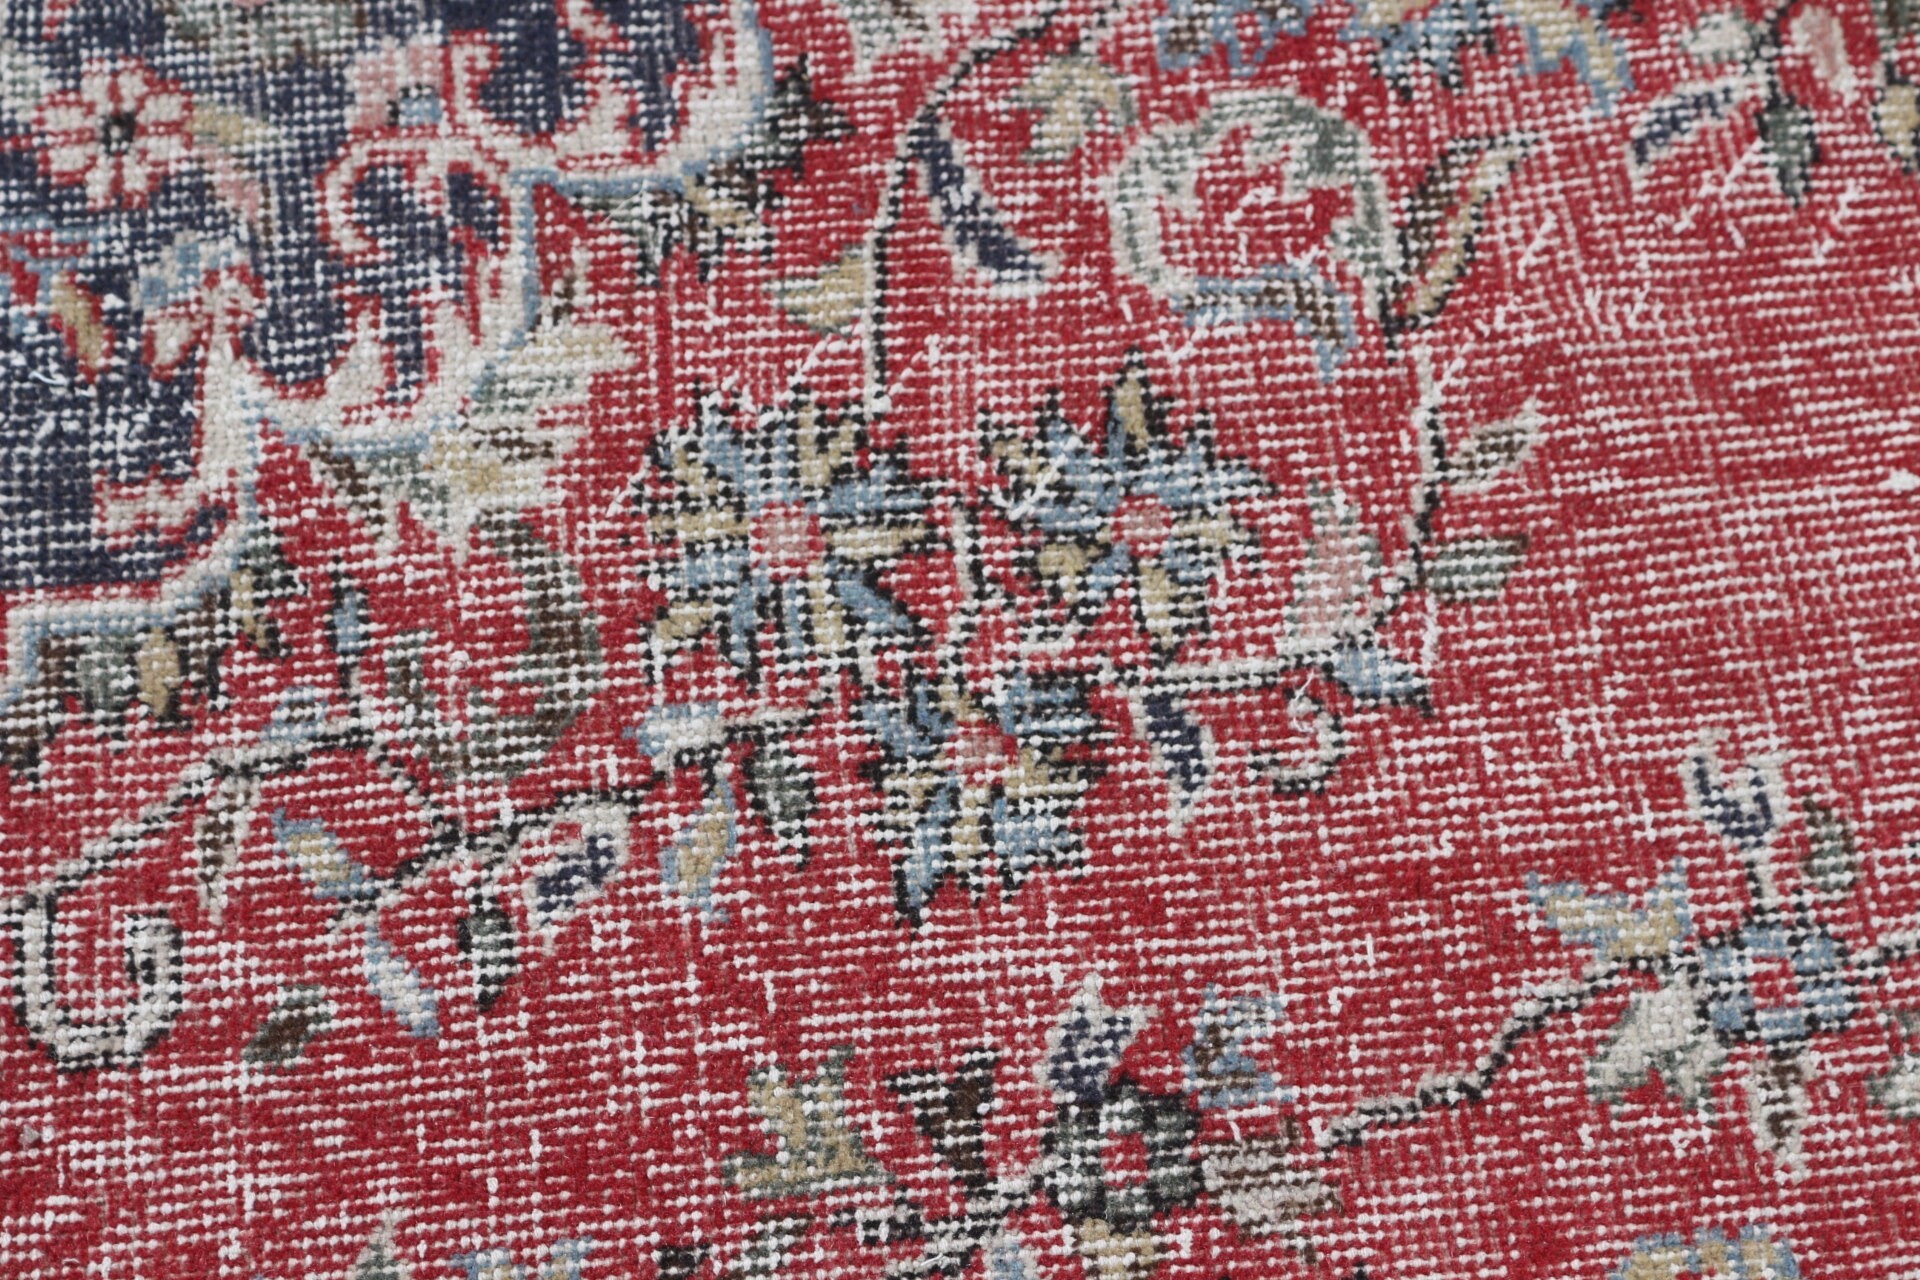 Red Wool Rug, Oriental Rug, Salon Rug, Vintage Rug, Dining Room Rugs, Turkish Rugs, Home Decor Rugs, Pale Rugs, 5.5x9.8 ft Large Rug